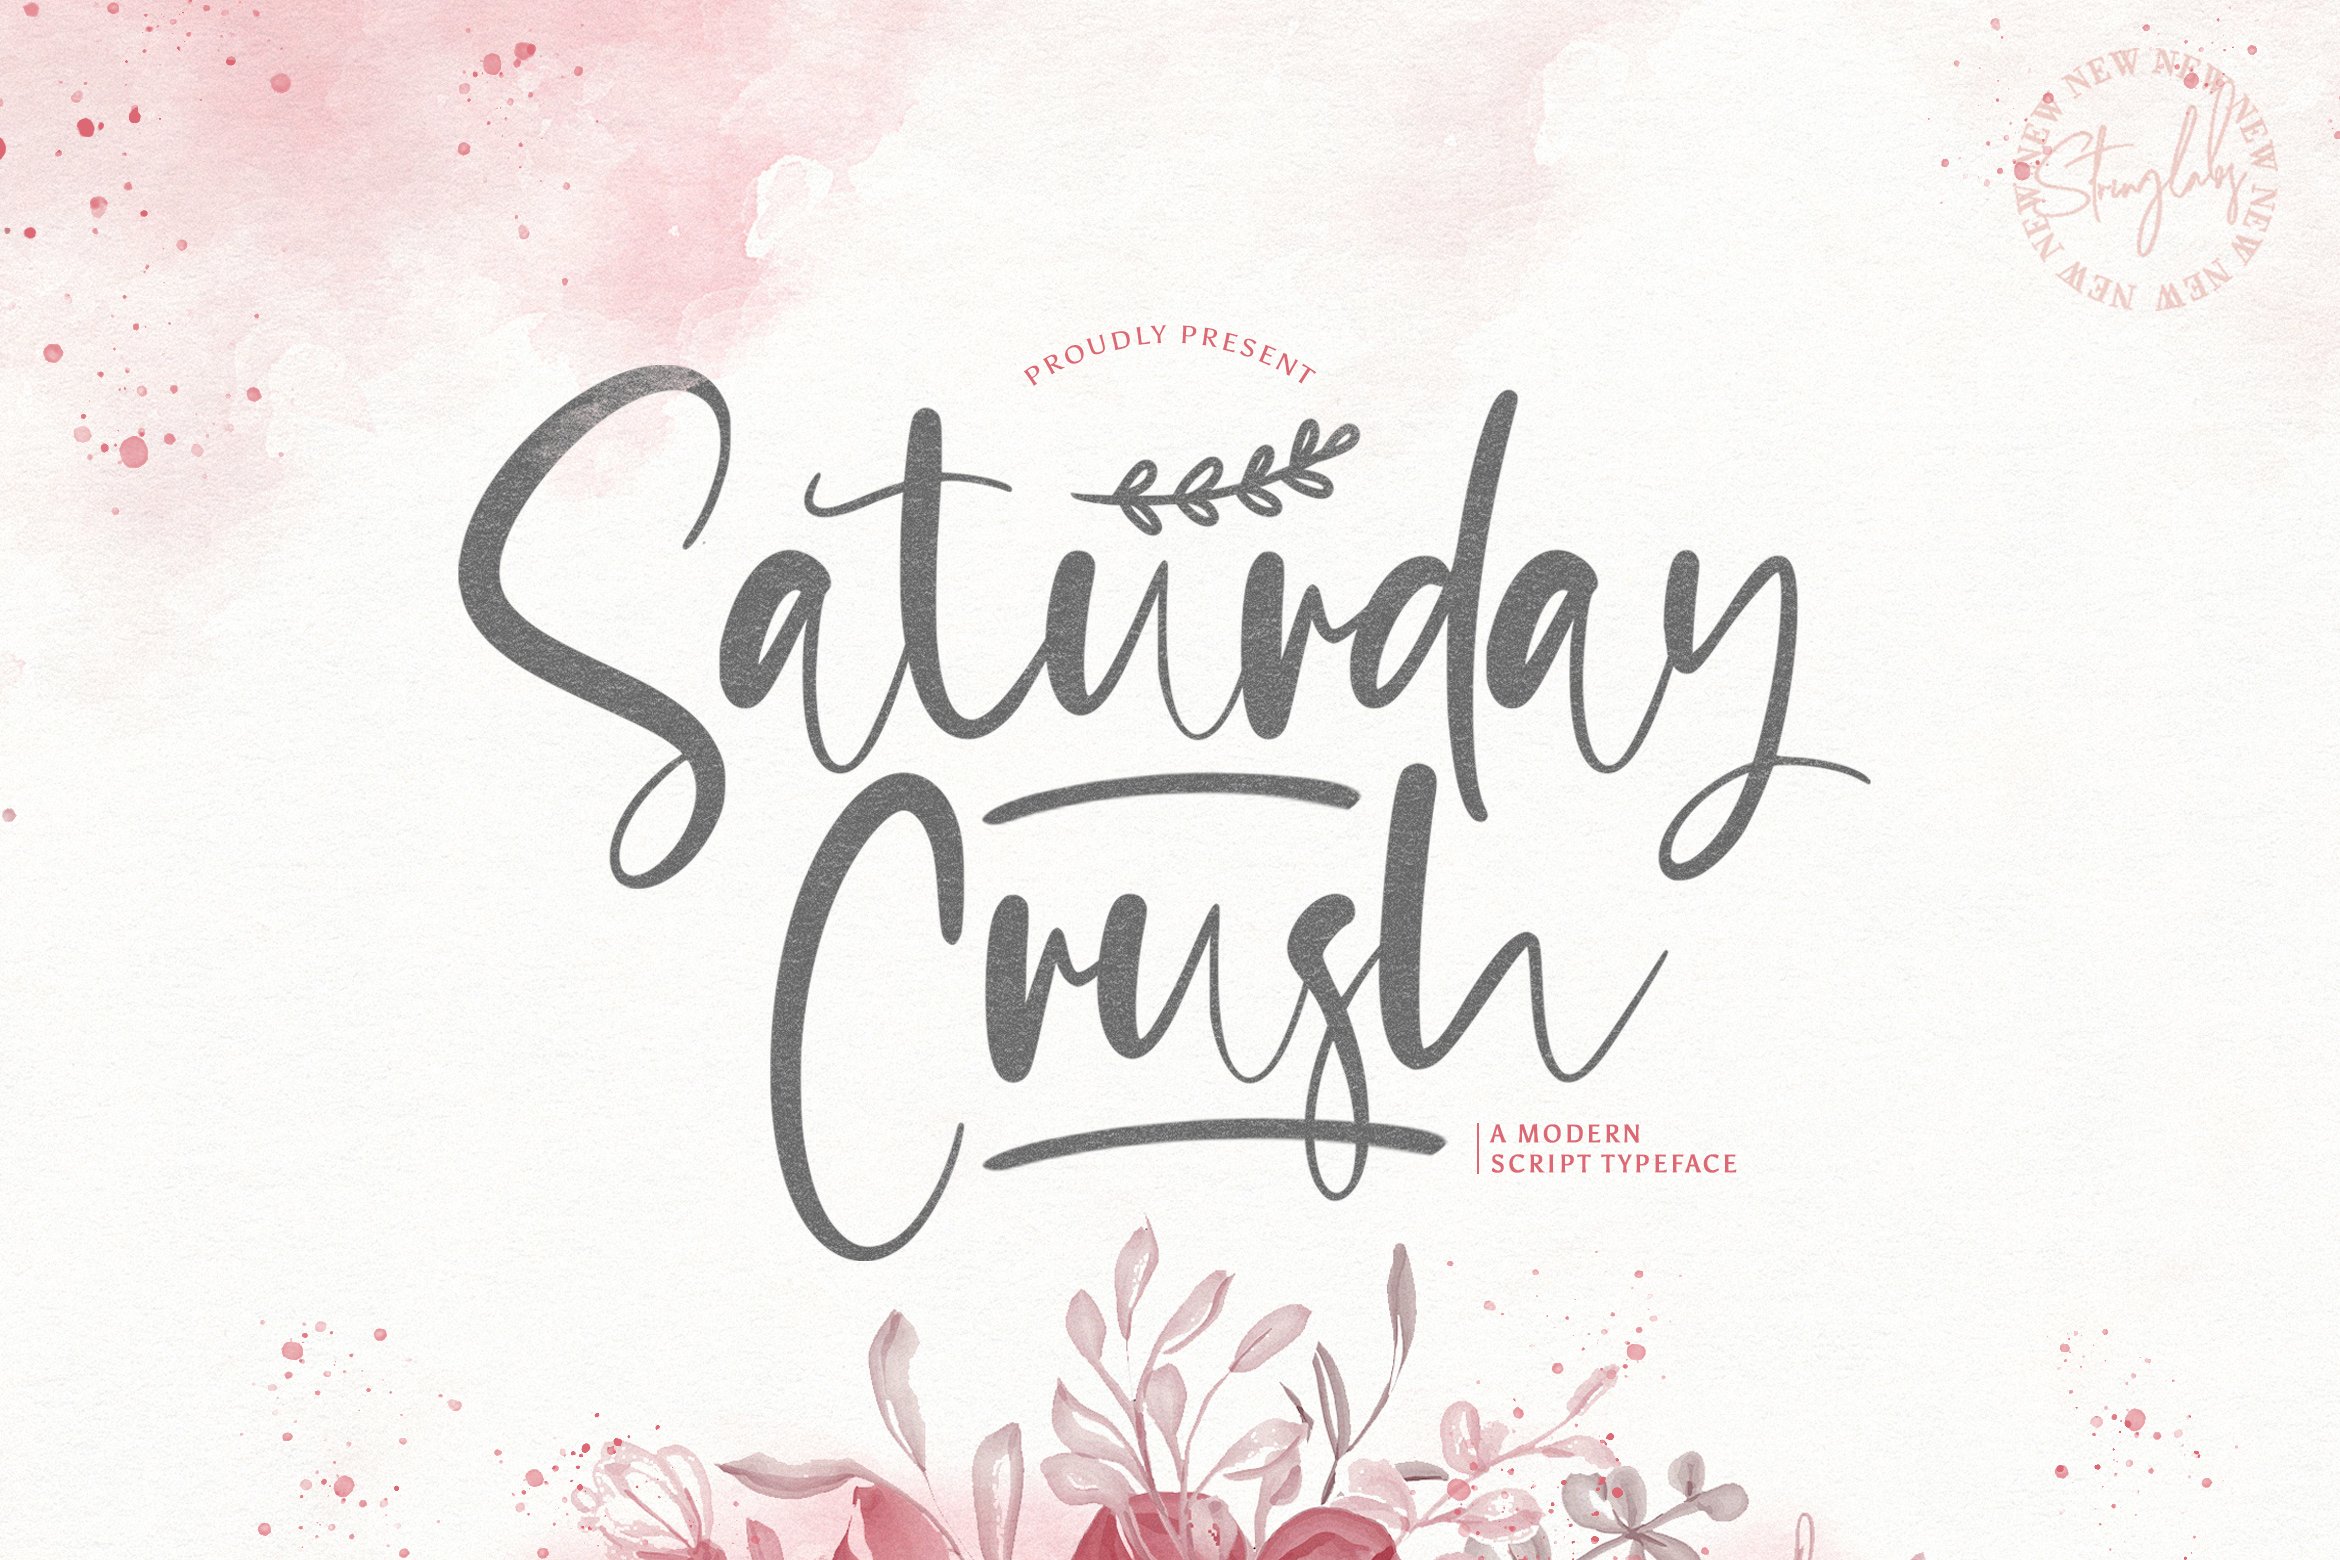 Saturday Crush - Handwritten Font cover image.